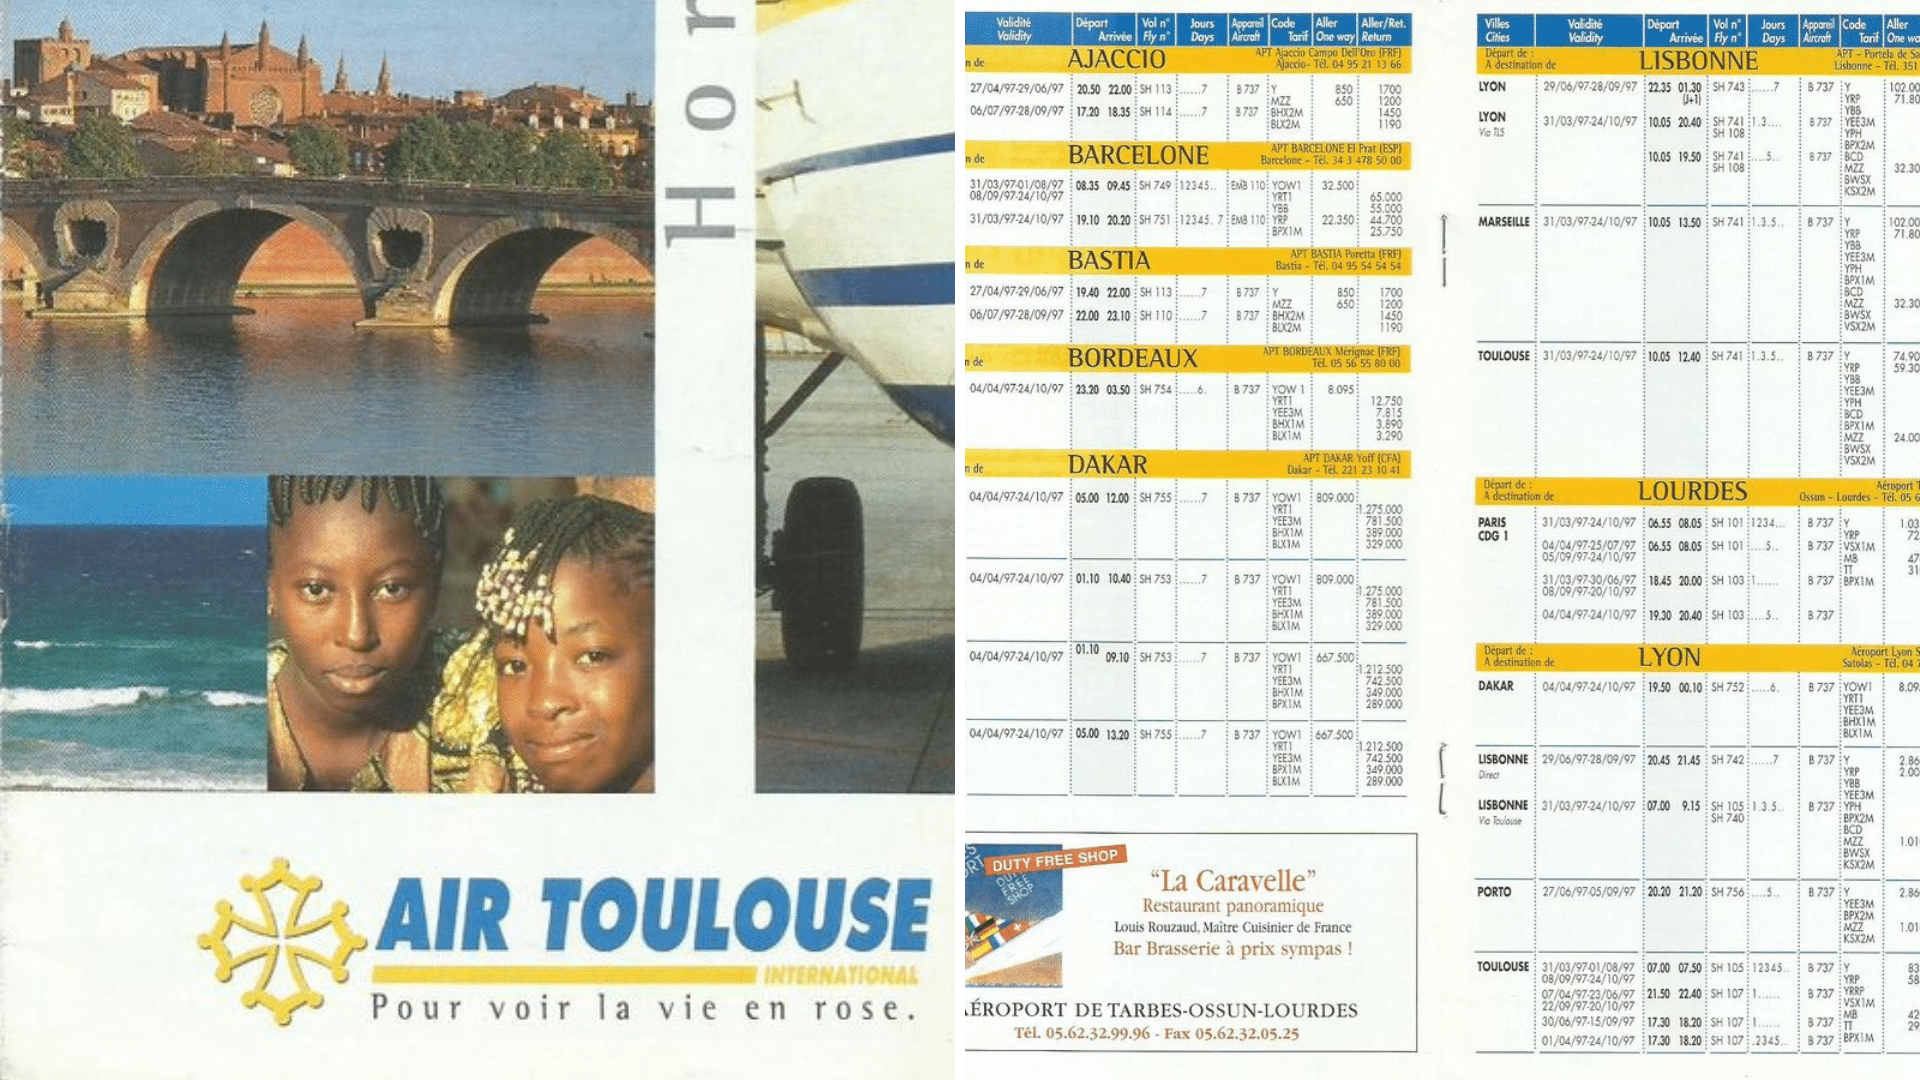  prospectus datant de 1997